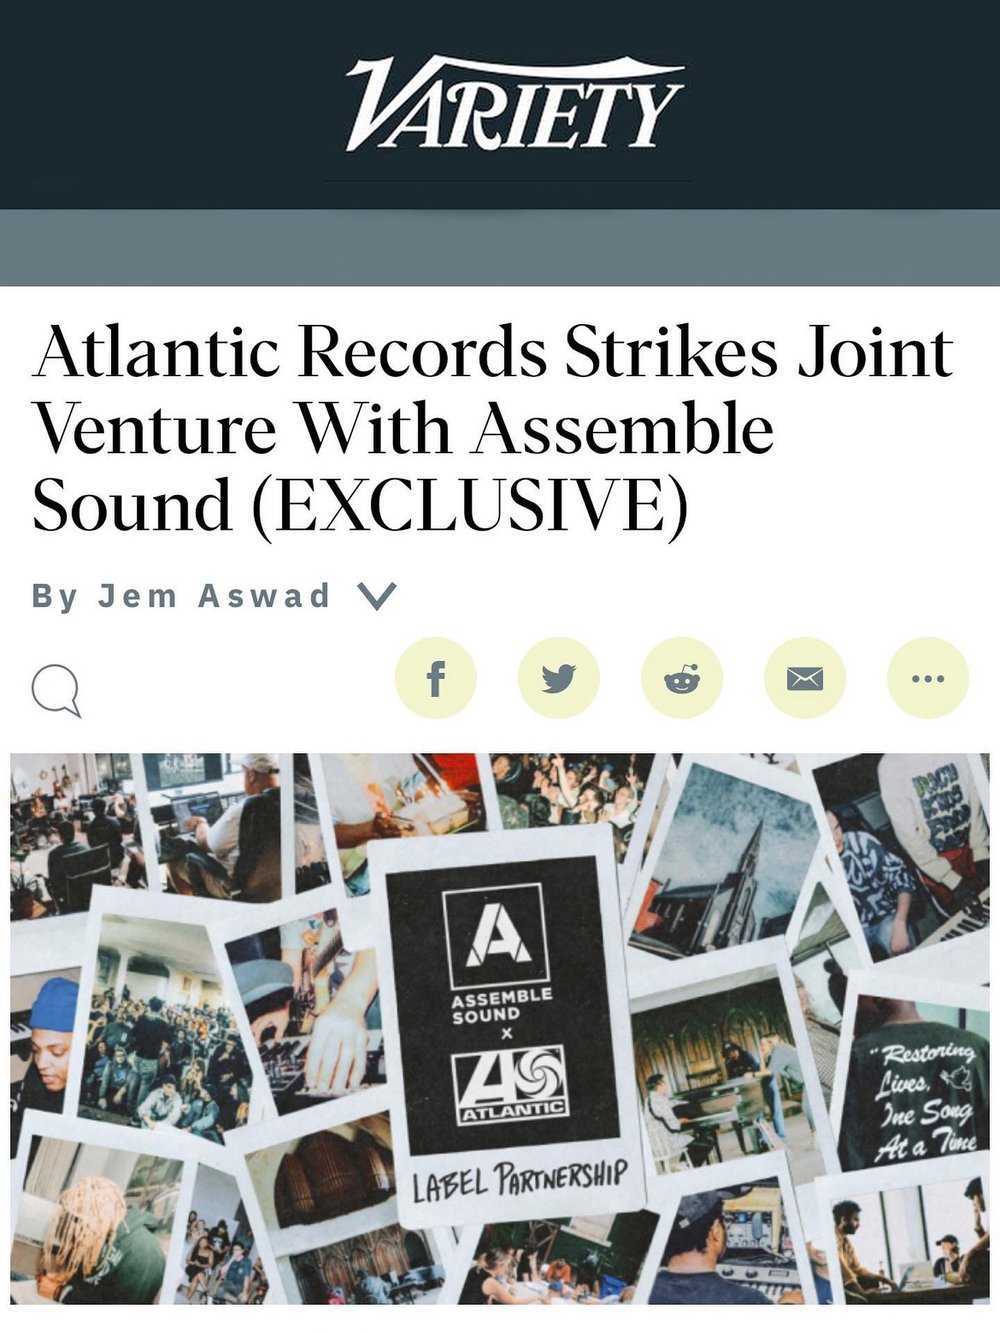 Atlantic Records Press